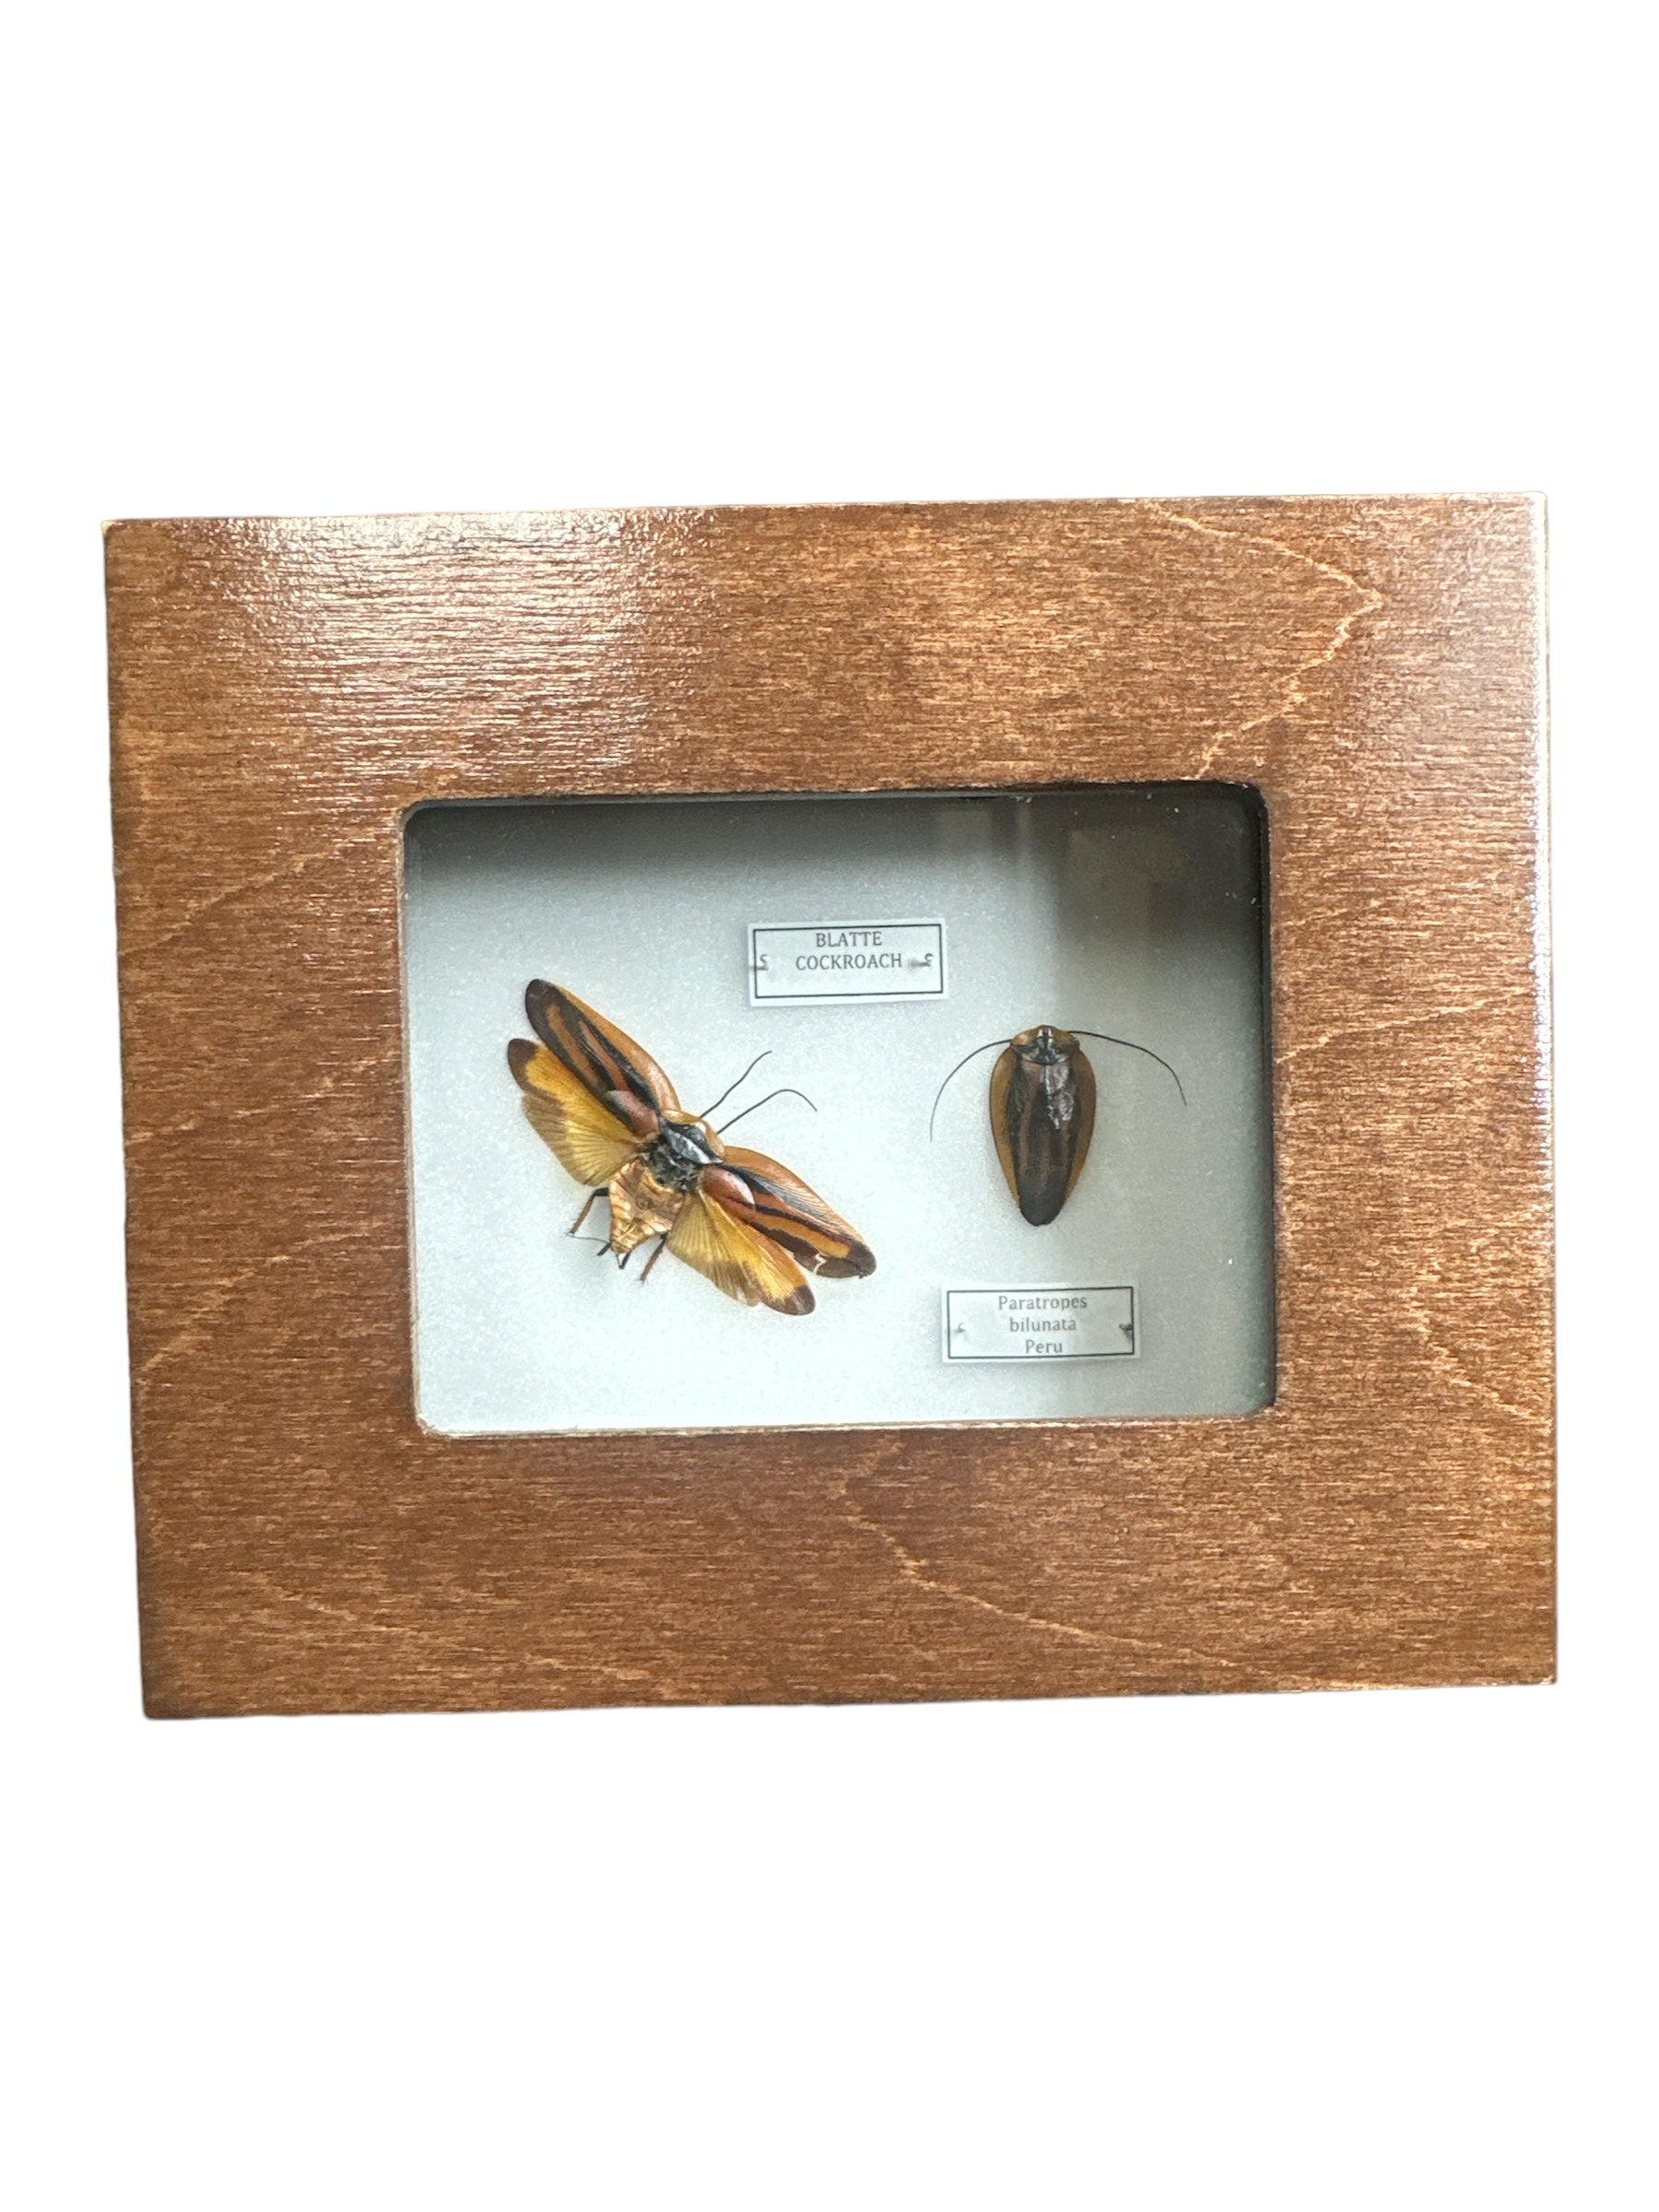 Cloud Forest Cockroach (Paratropes bilunata) - 2x3" Frame